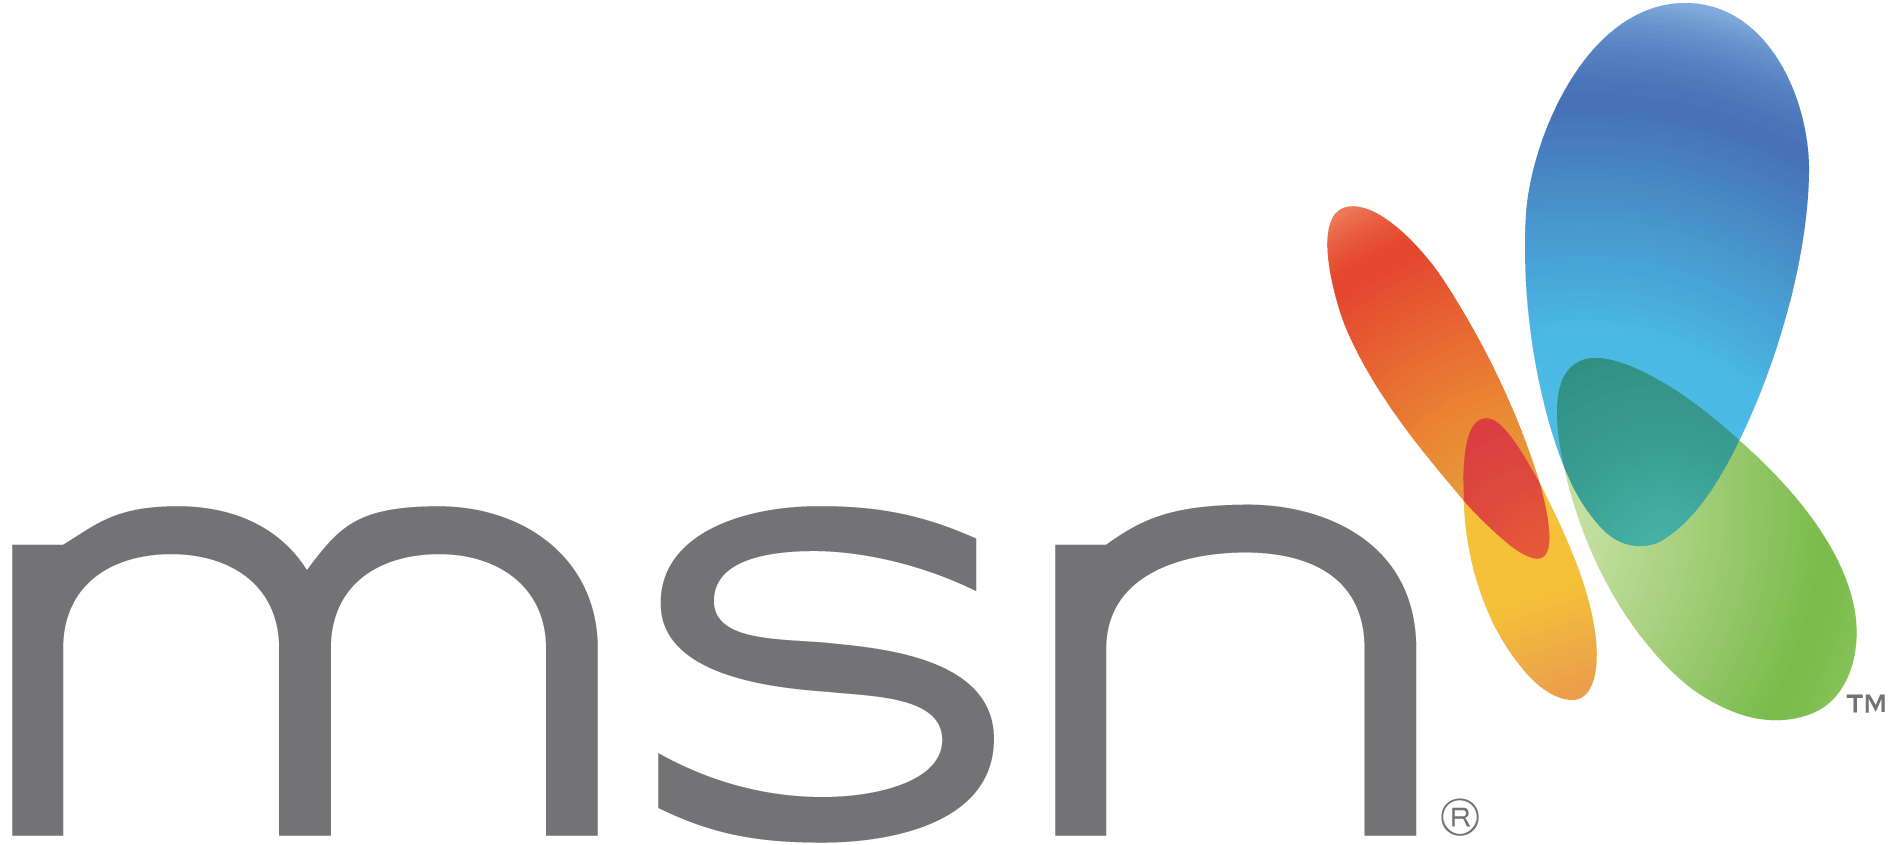 MSN Logo - Image - MSN logo 2009.png | Logopedia | FANDOM powered by Wikia